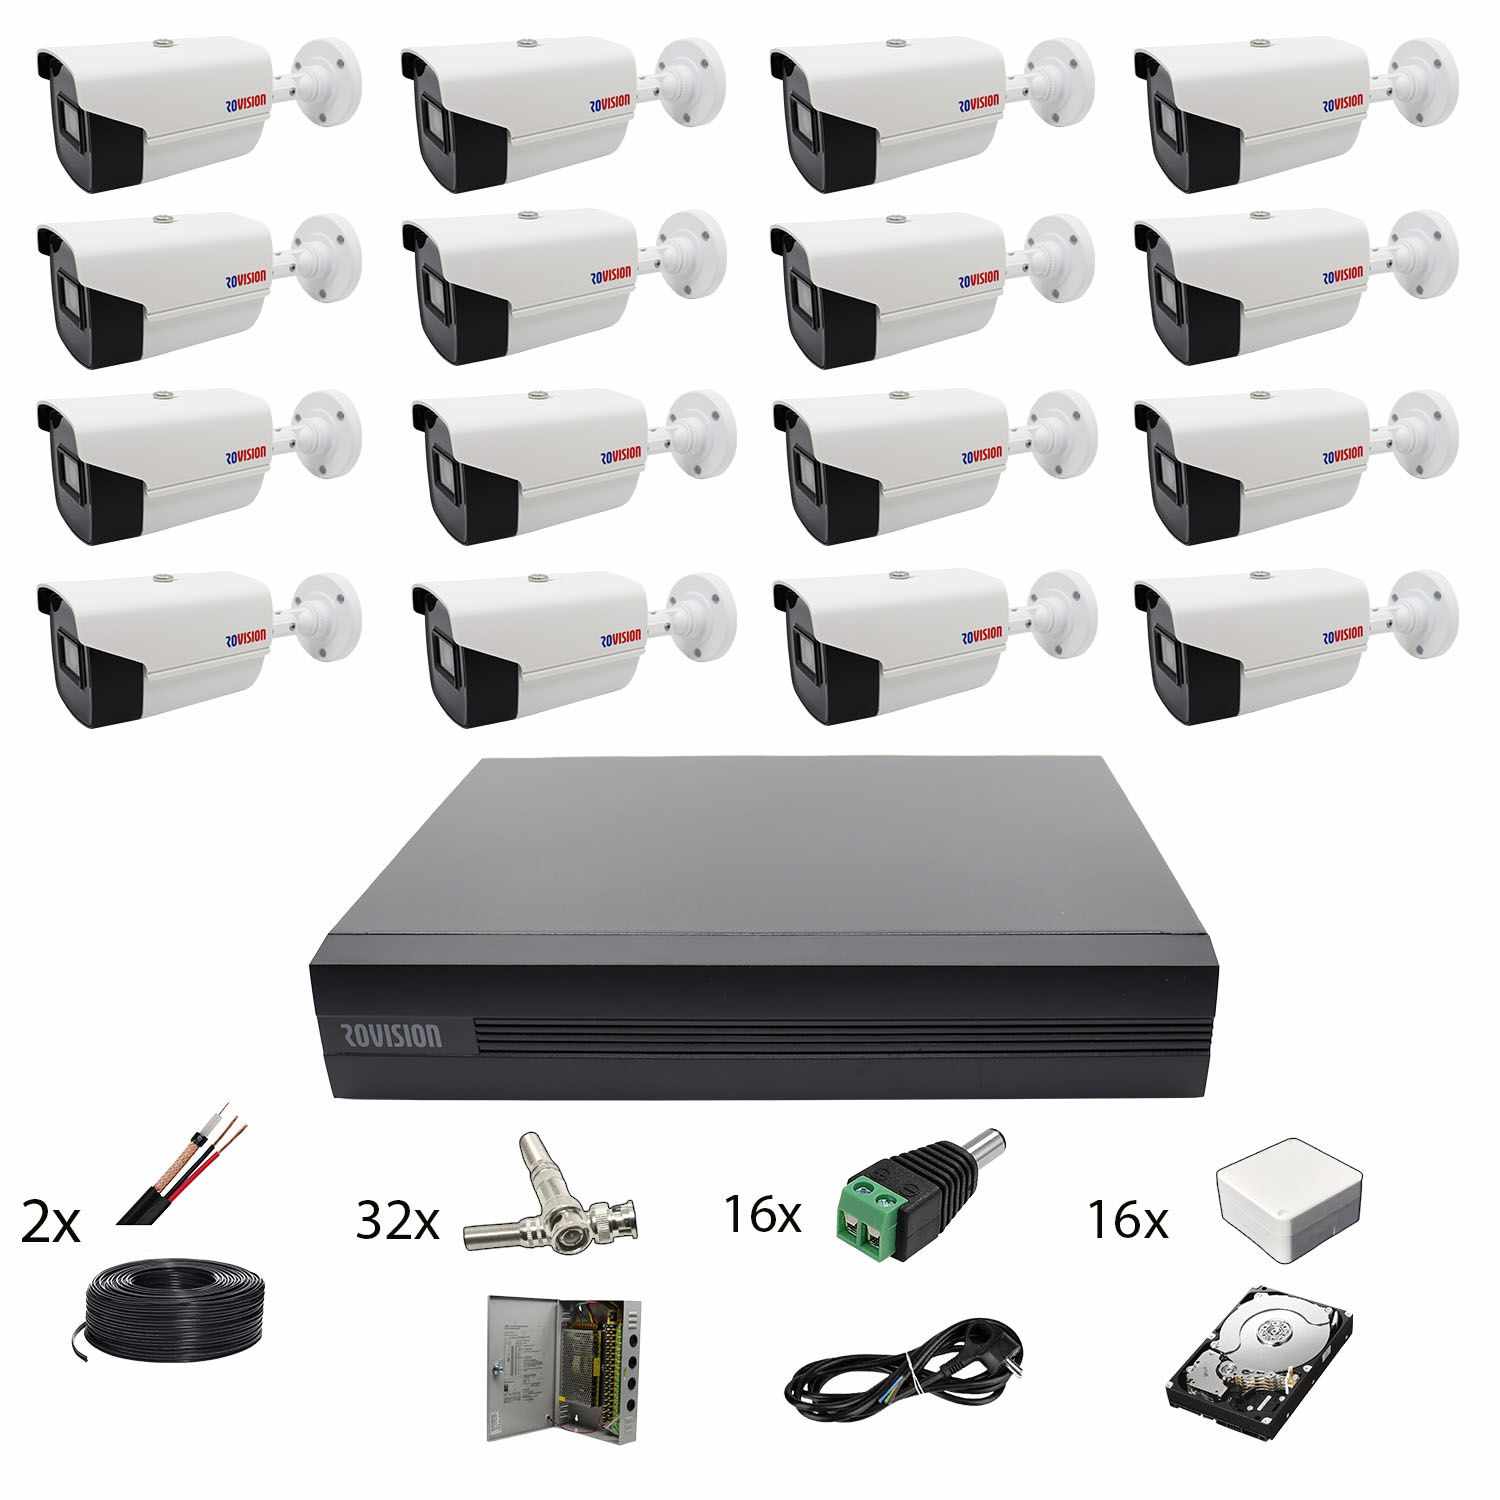 Sistem supraveghere 16 camere Rovision oem Hikvision, 2MP, full hd, IR40M, DVR Pentabrid 16 canale, accesorii si hard incluse